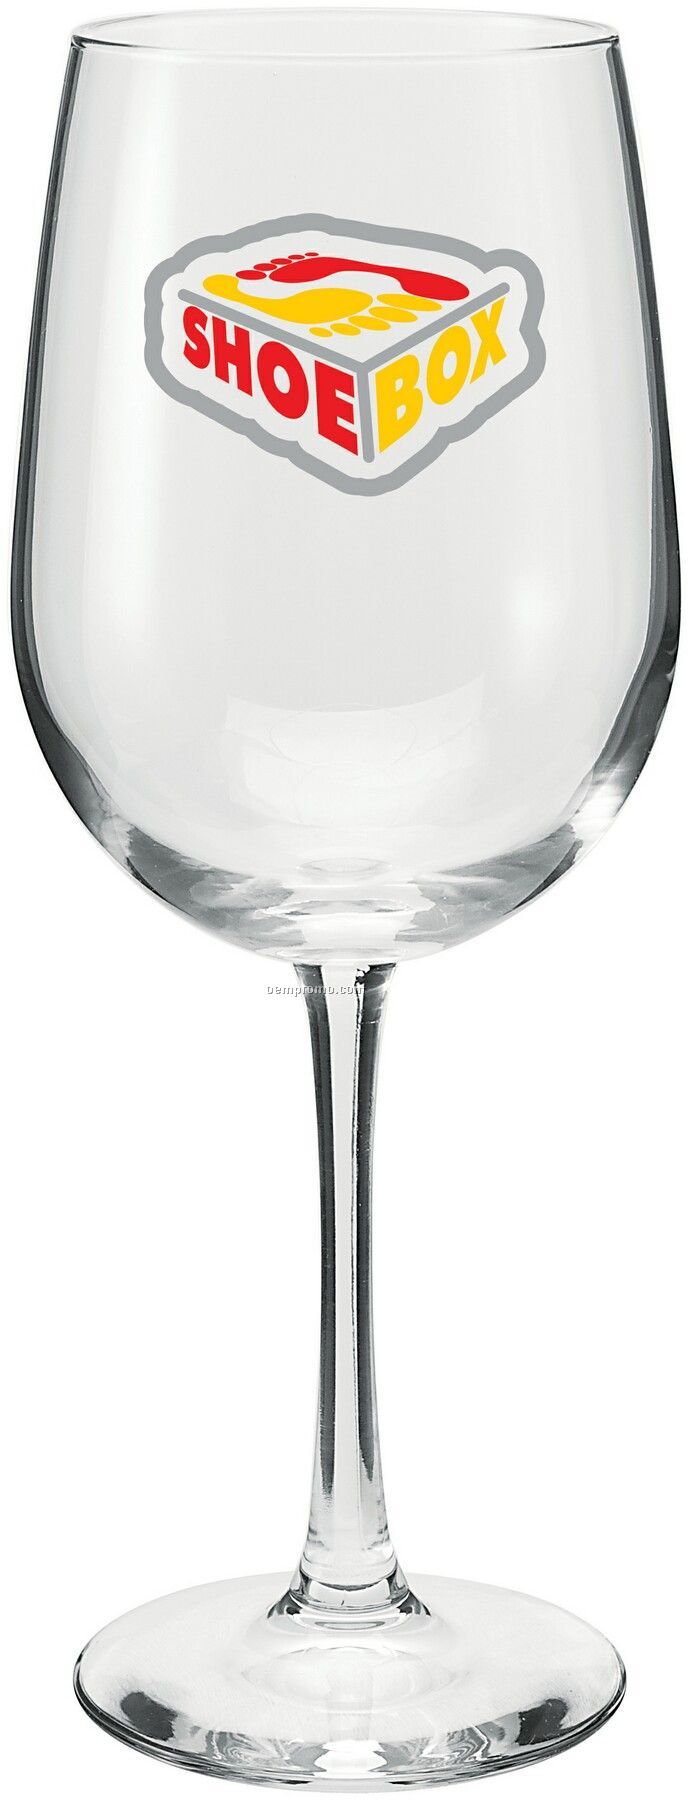 18.5 Oz. Vina Collection Tall Wine Glass